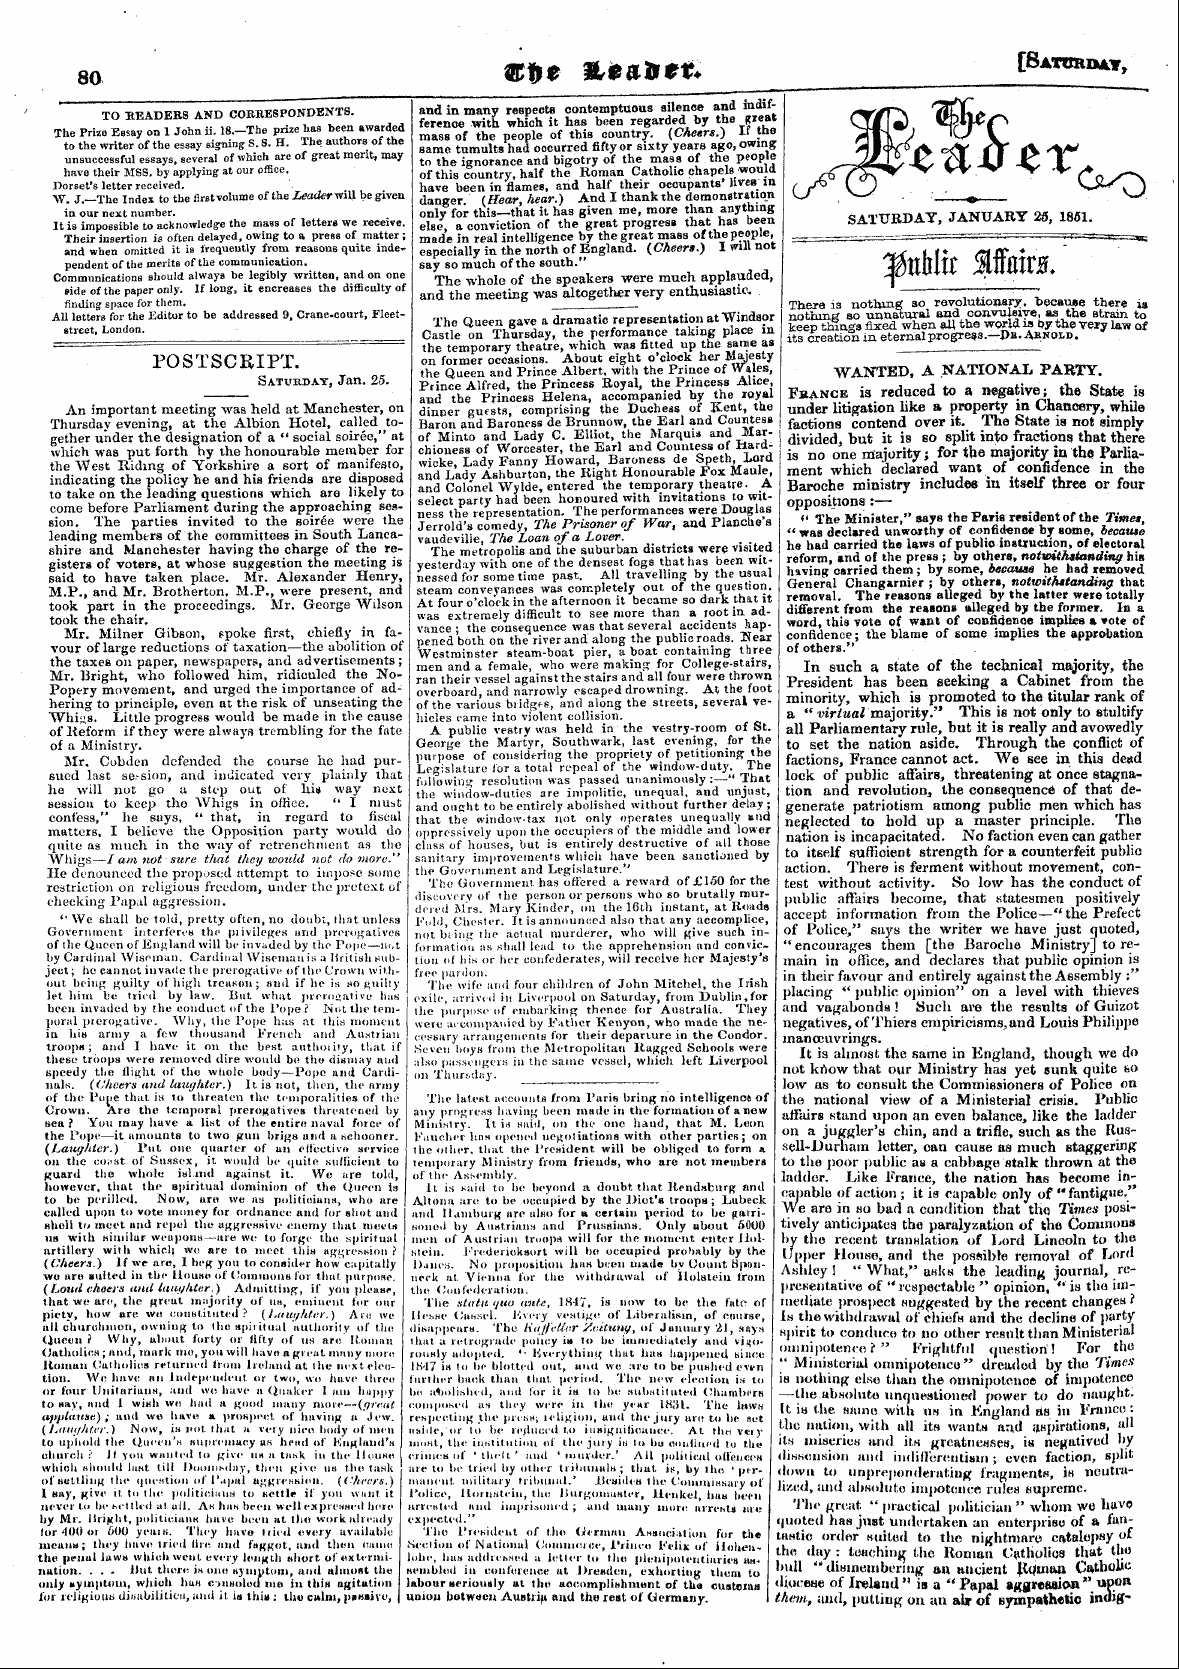 Leader (1850-1860): jS F Y, Town edition - Postscript. Saturday, Jan. 25.